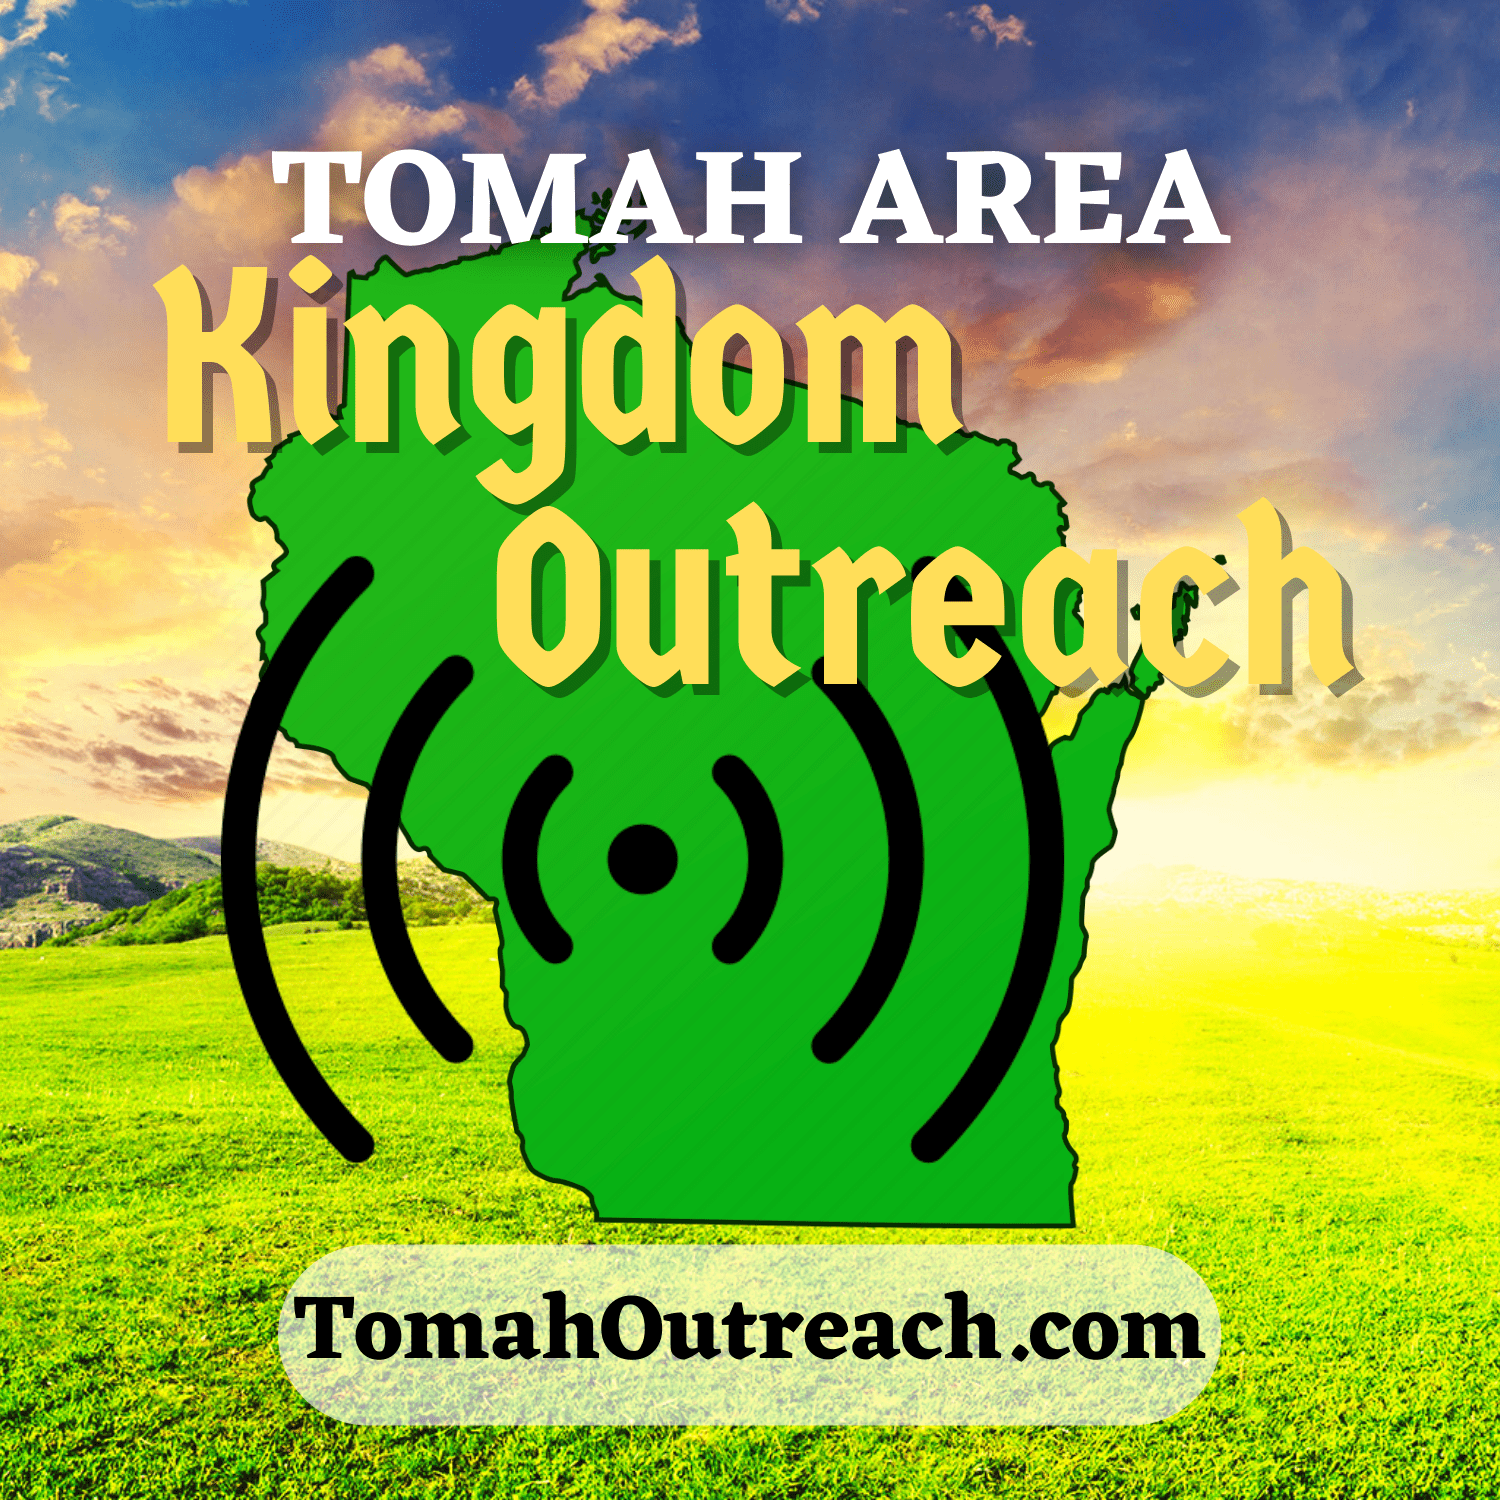 Tomah Area Kingdom Outreach